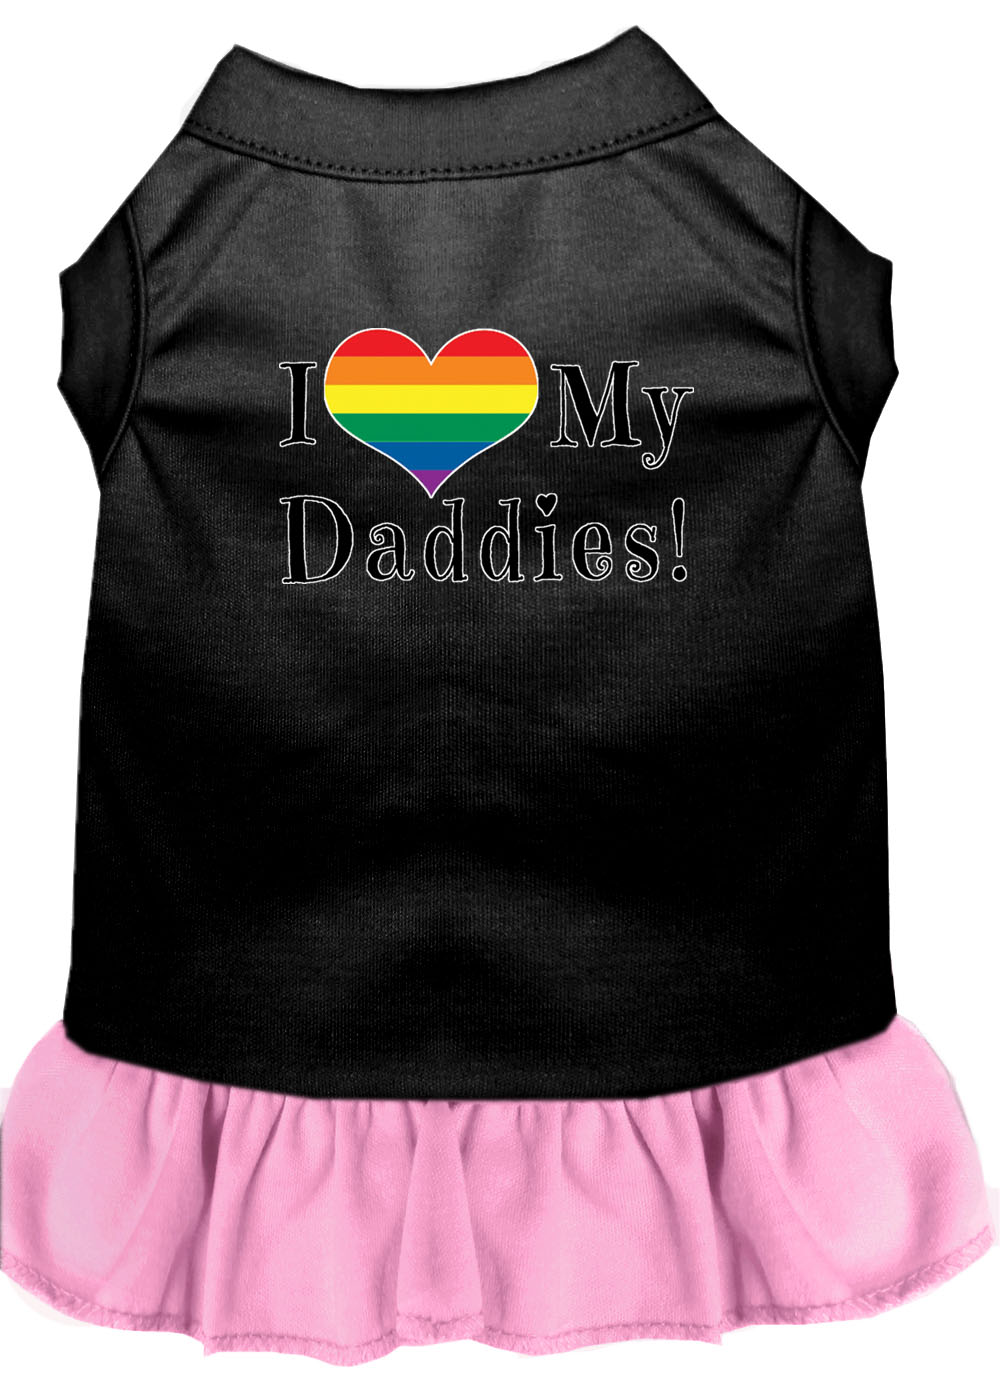 I Heart my Daddies Screen Print Dog Dress Black with Light Pink Sm